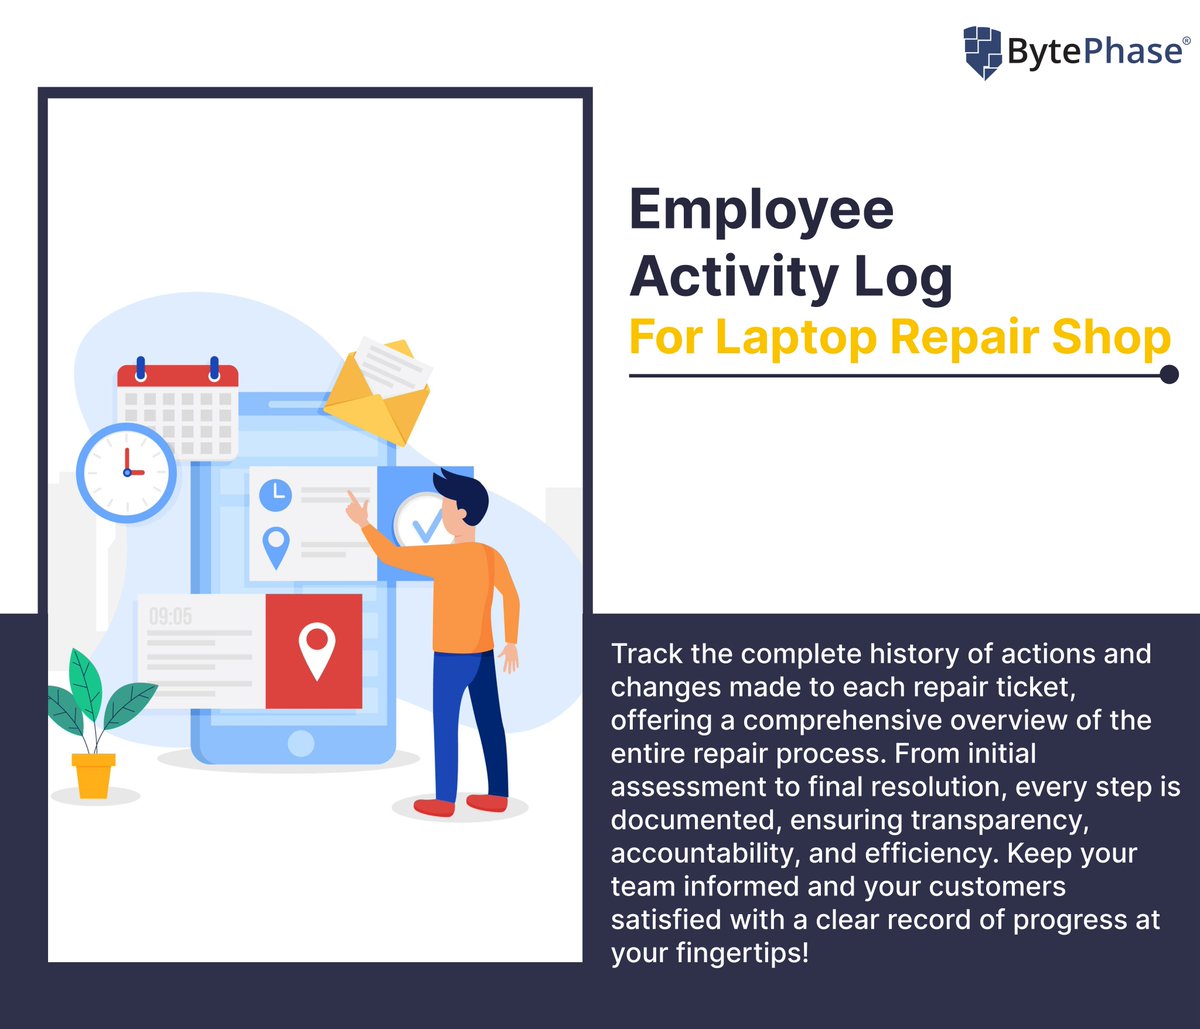 Employee Activity Log For Laptop Repair Shop

#ActivityLog  #ComprehensiveTracking #TransparentProcess #TeamAccountability #OperationalEfficiency #CustomerSatisfaction